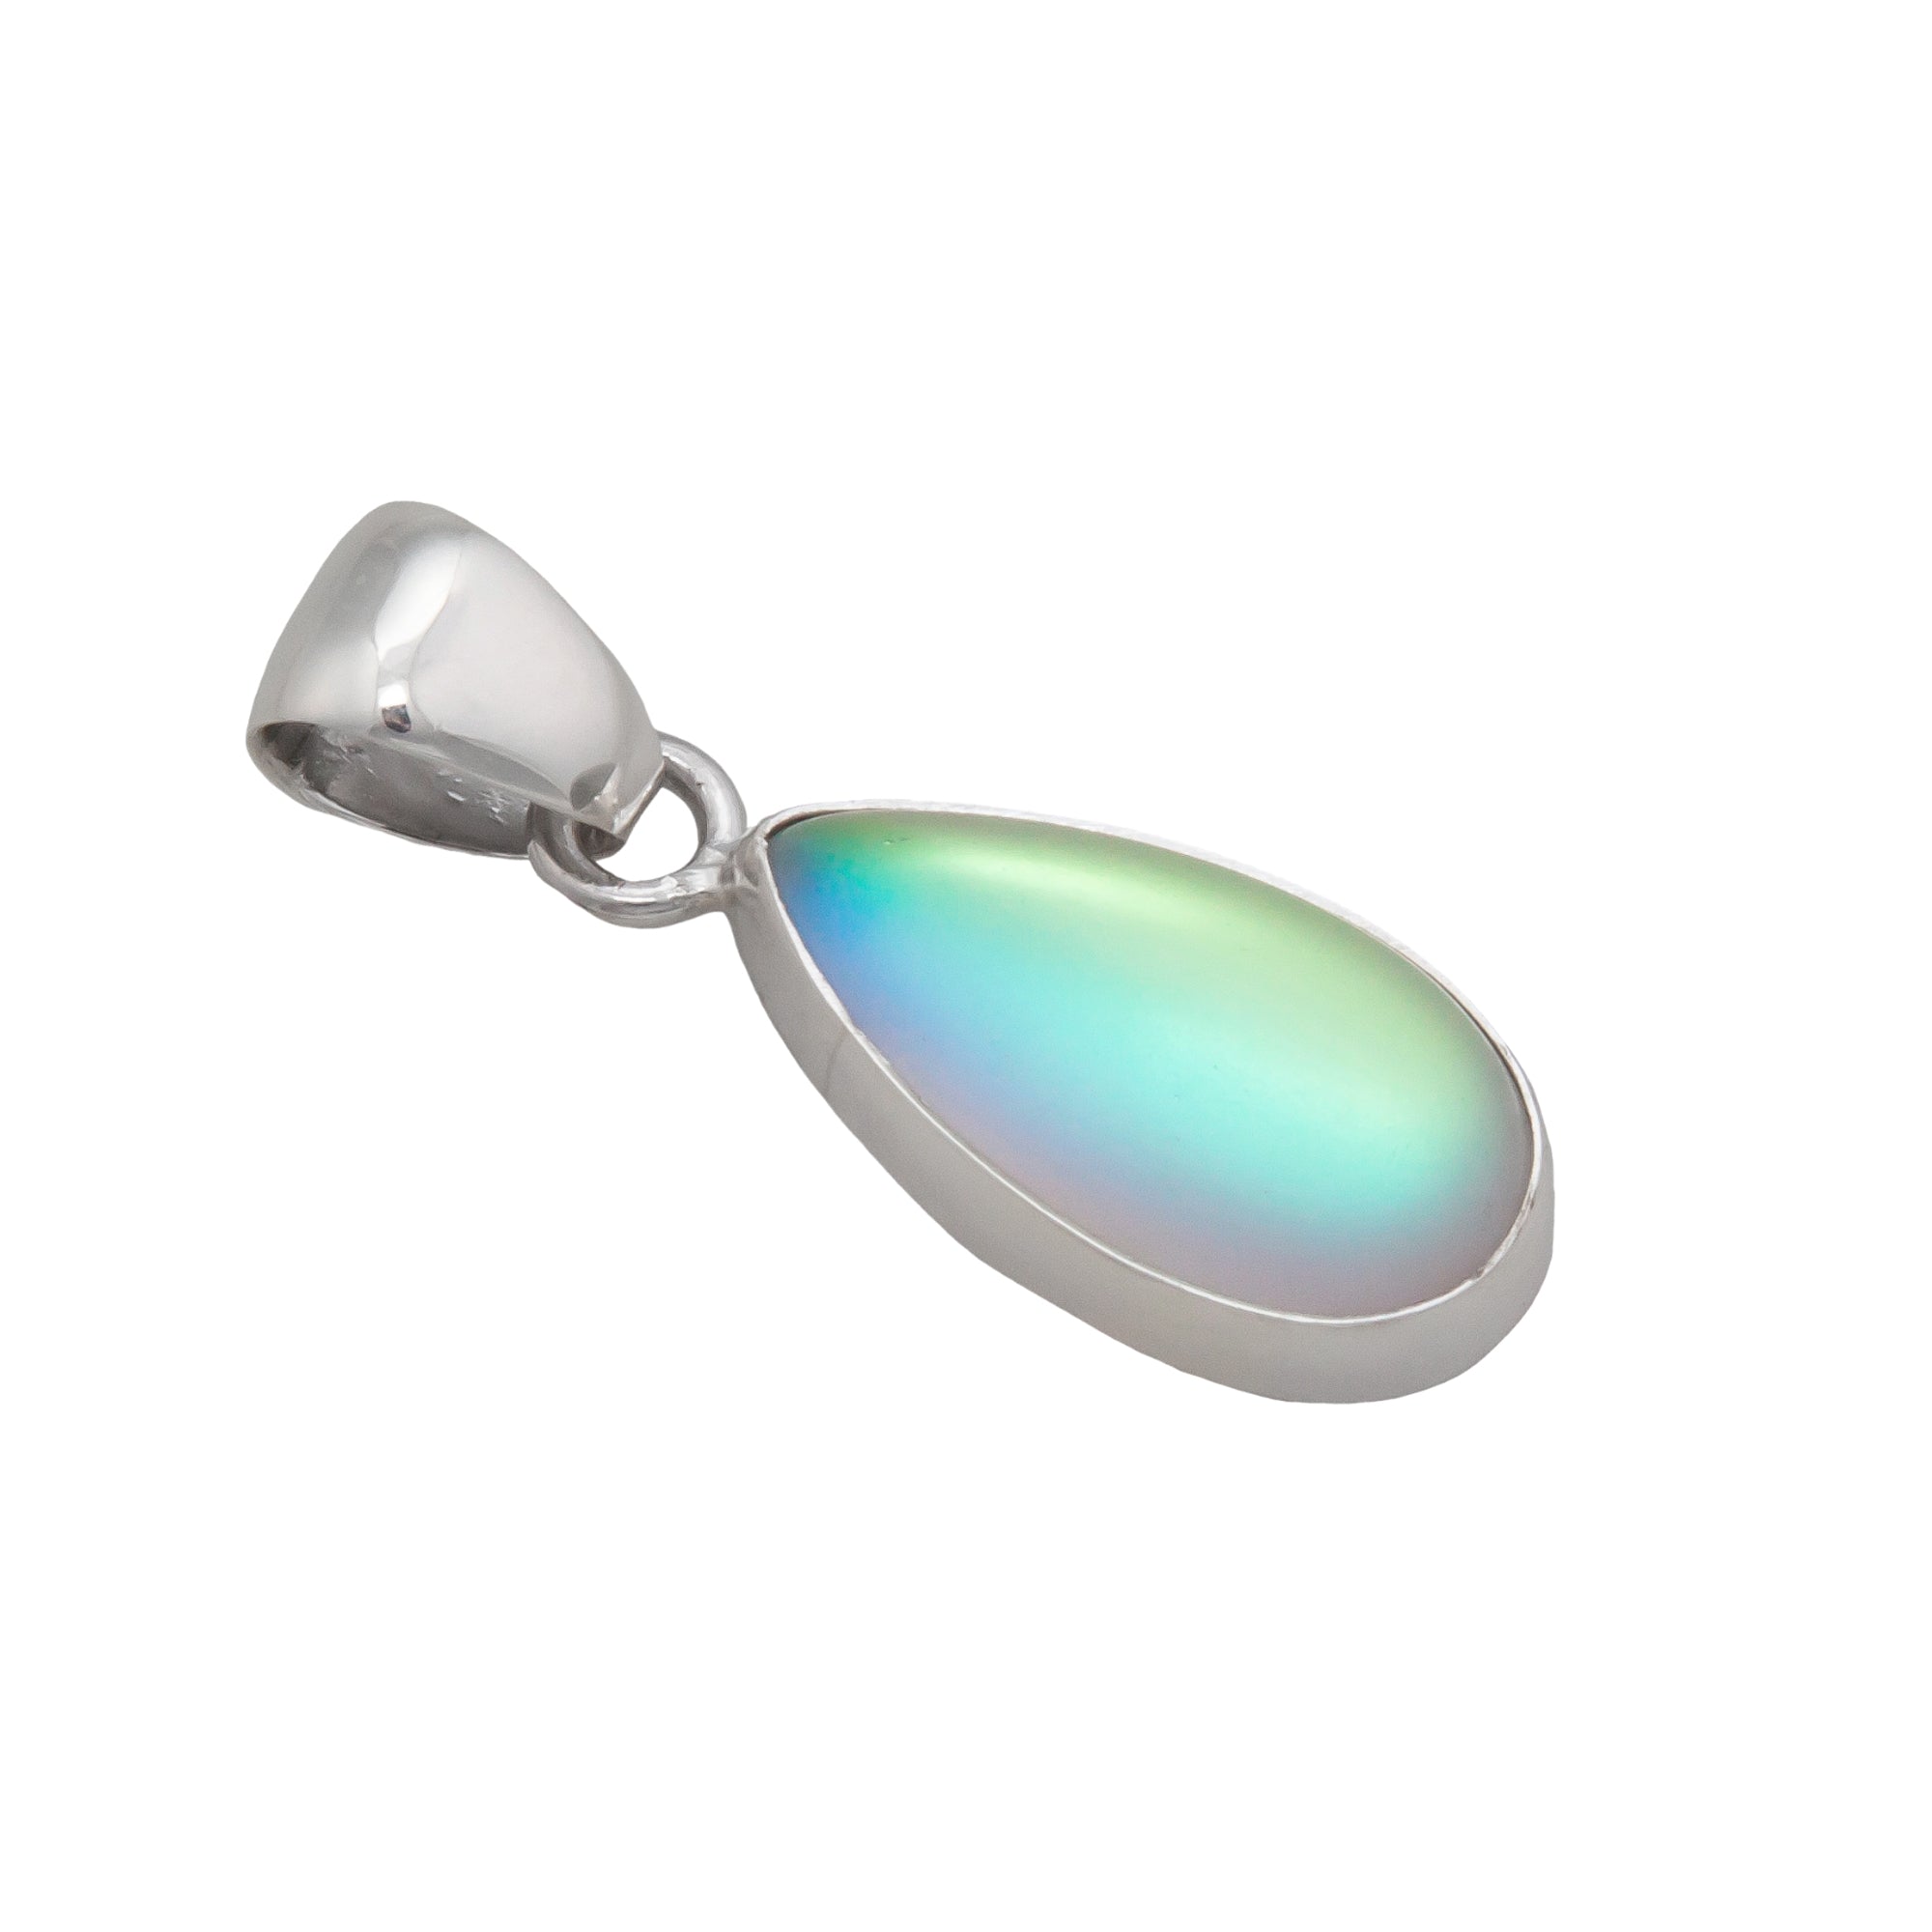 Sterling Silver Teardrop Luminite Pendant | Charles Albert Jewelry